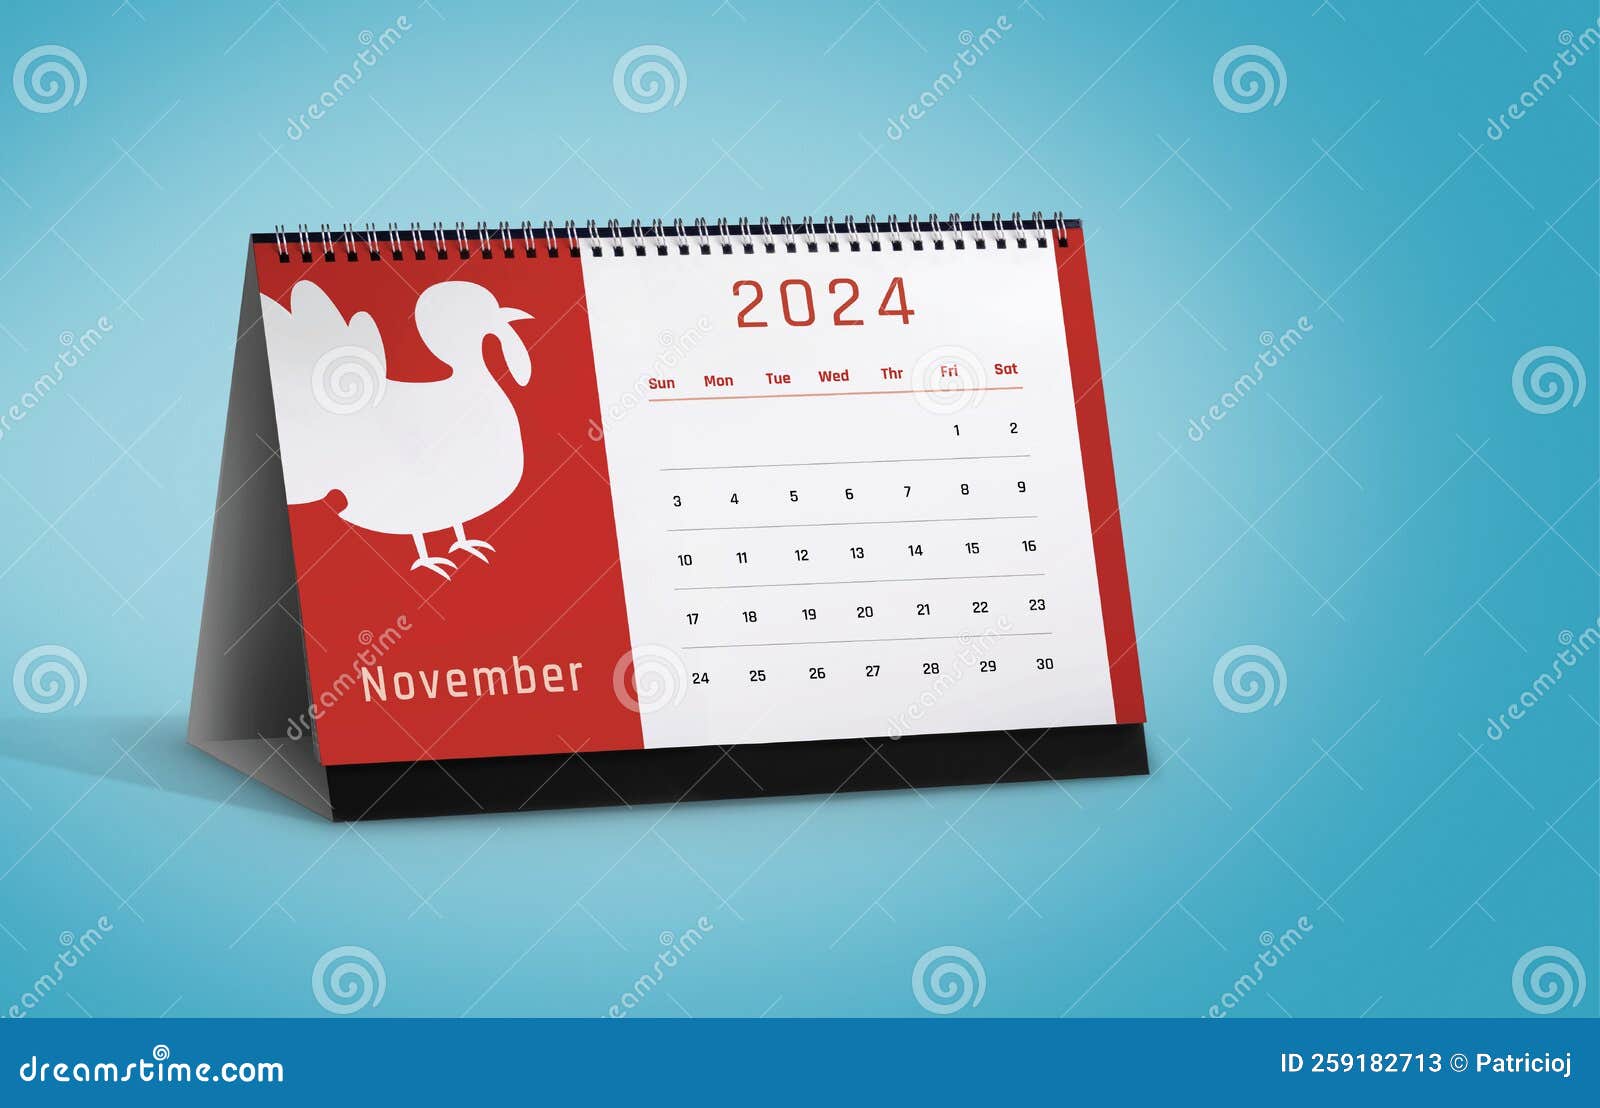 November 2024 Calendar with Turkey Icon Isolated on Blue Background